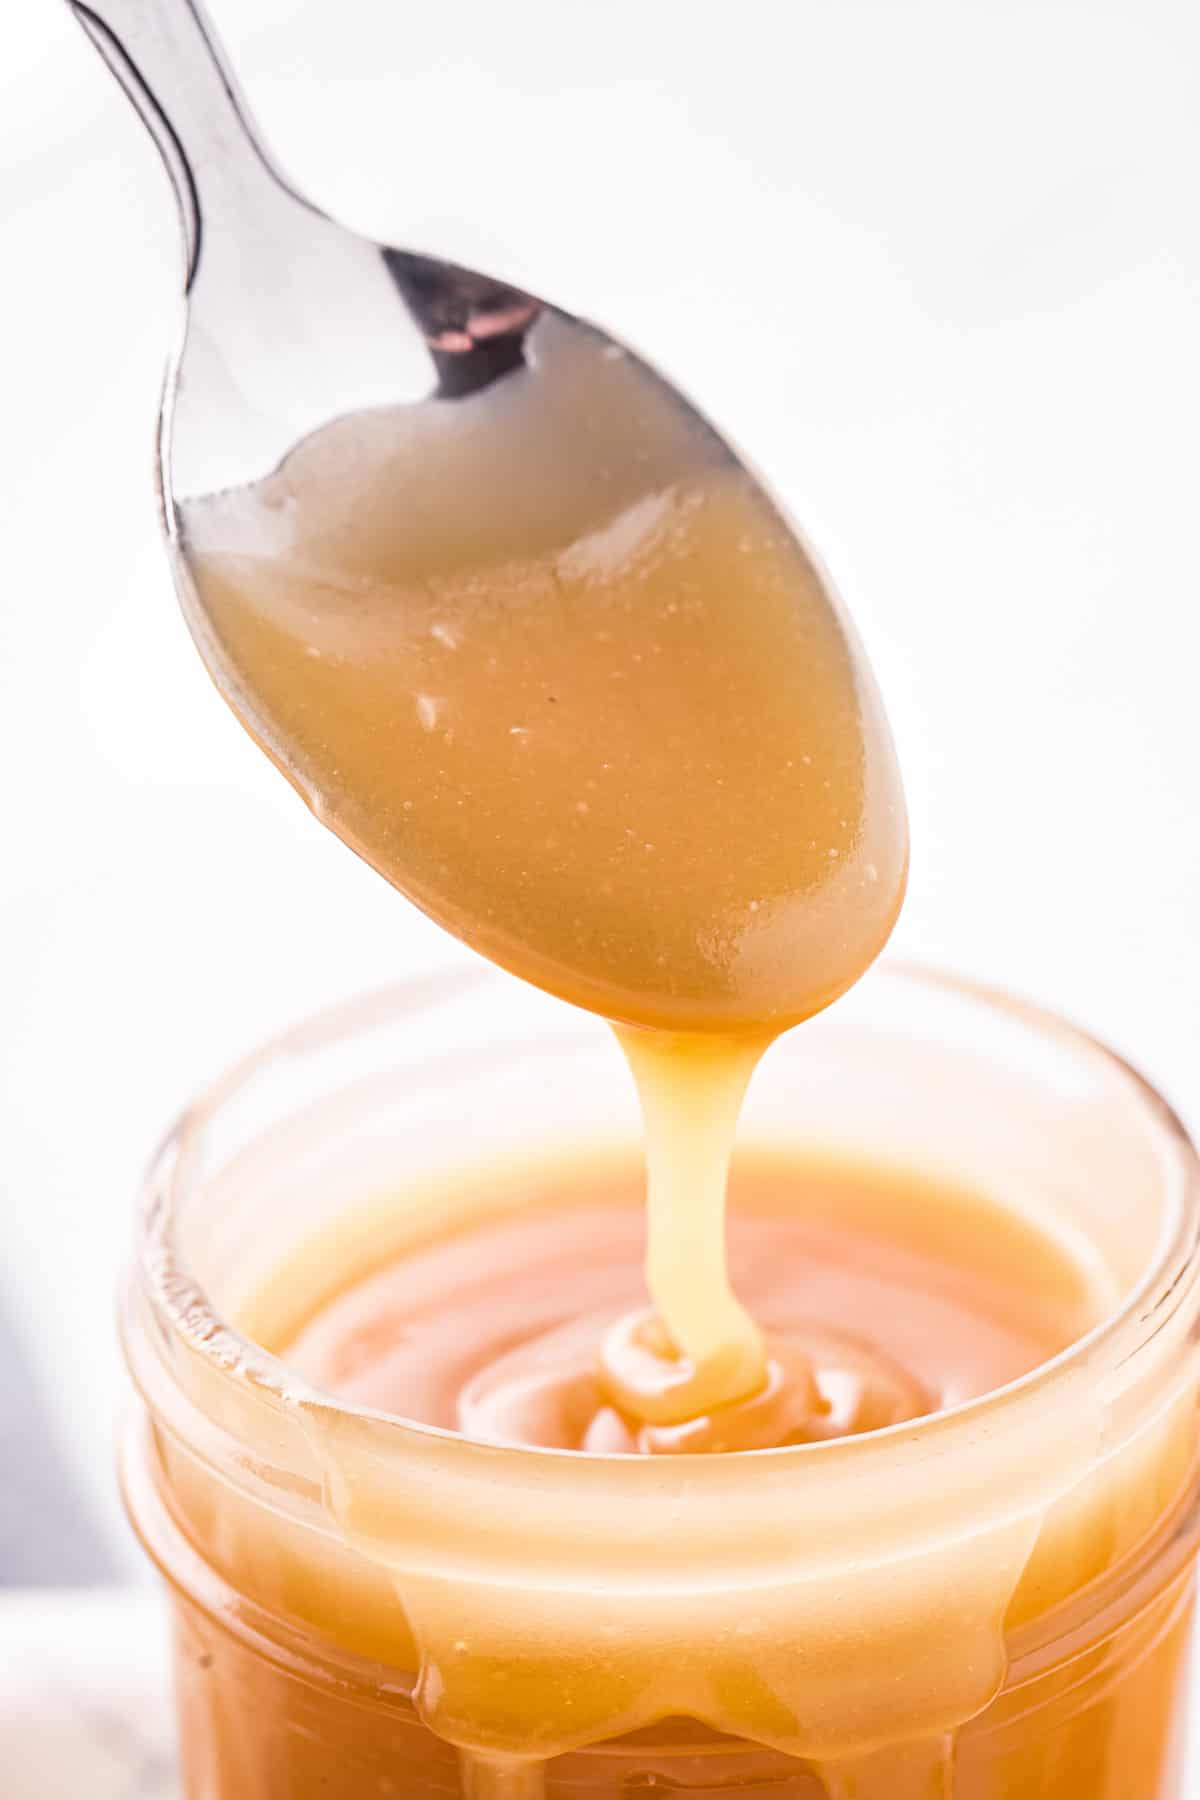 Spoon drizzling caramel sauce into glass jar.